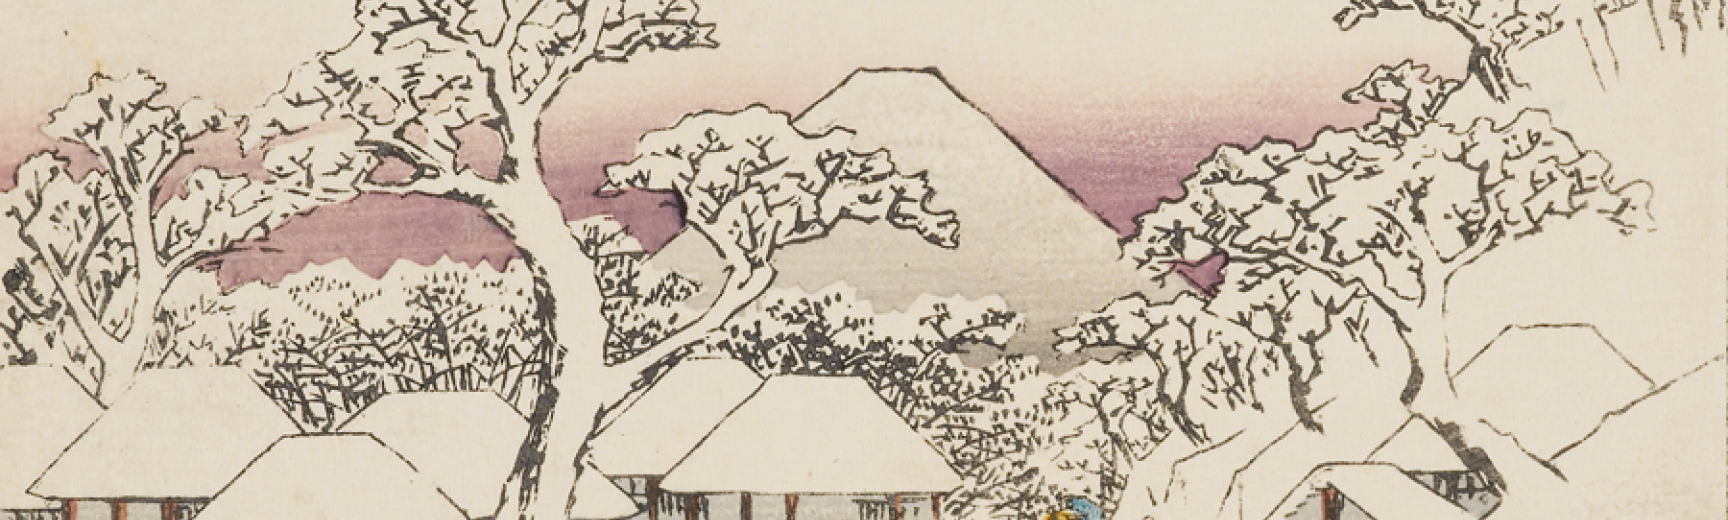 Mishima Hiroshige's Japan